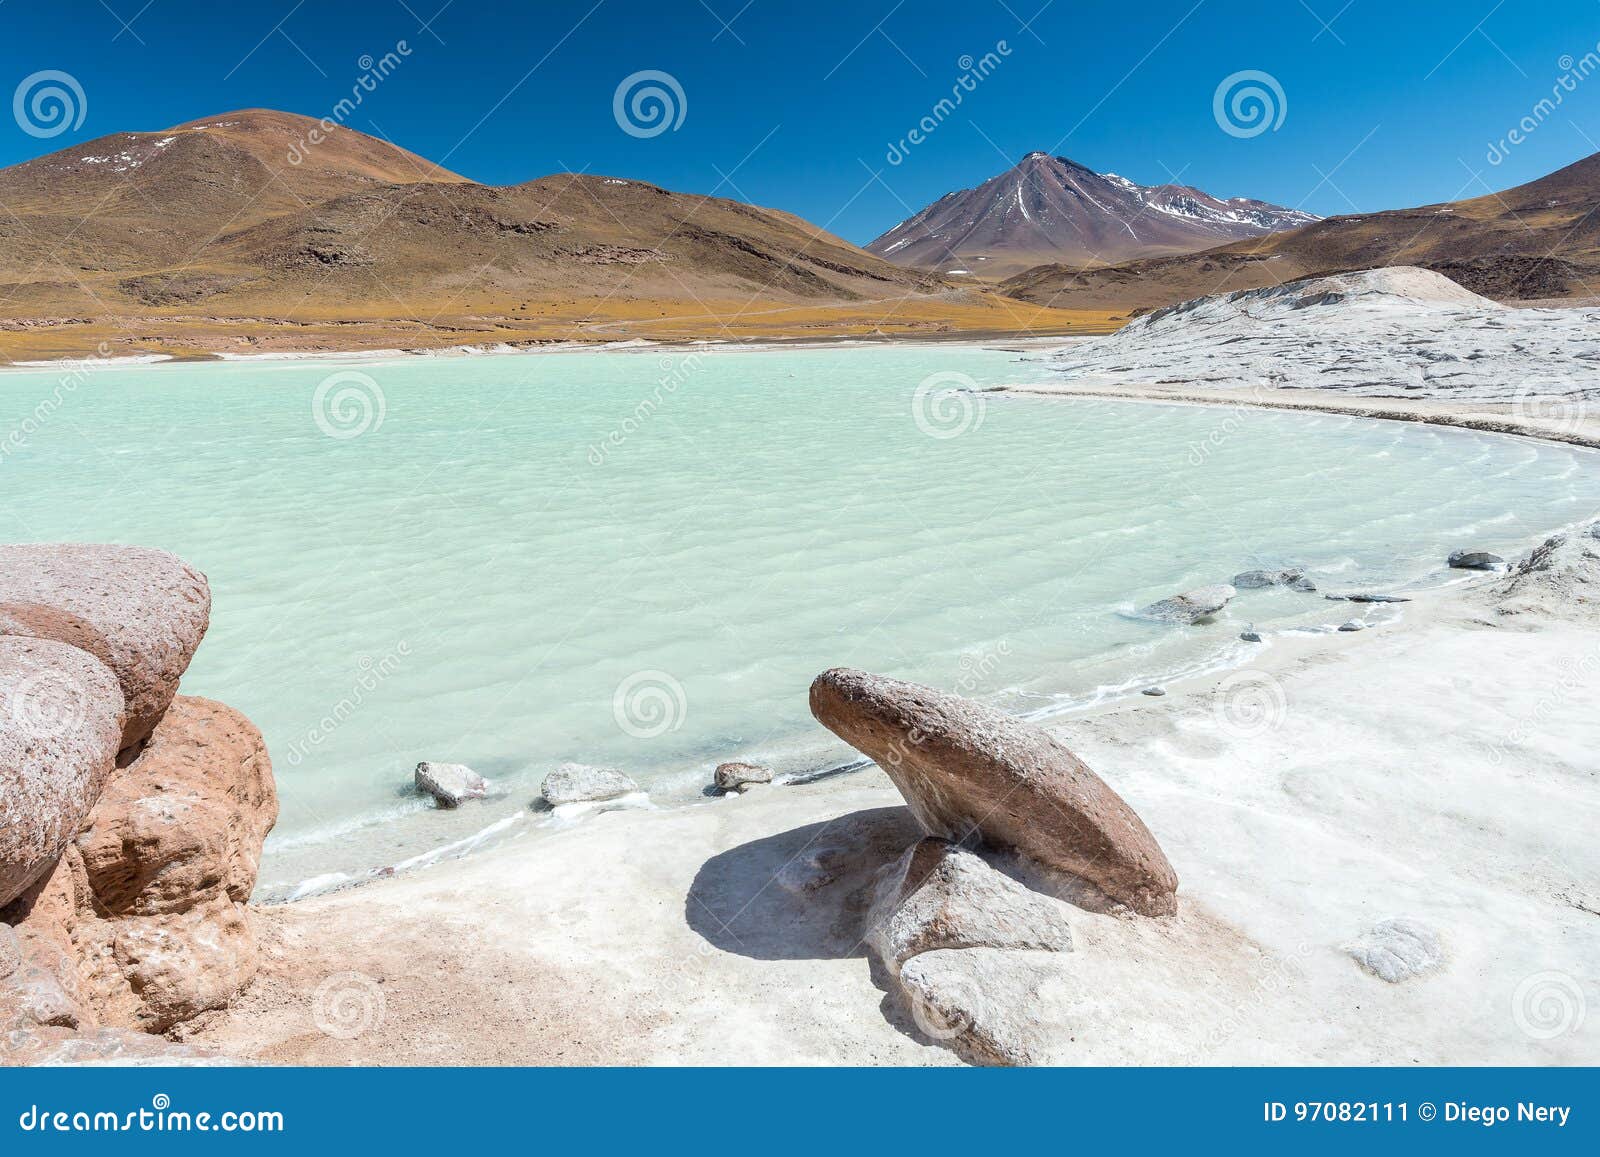 piedras rojas, volcano, snow, mountain, rocks, lake, white sand, turquoise water